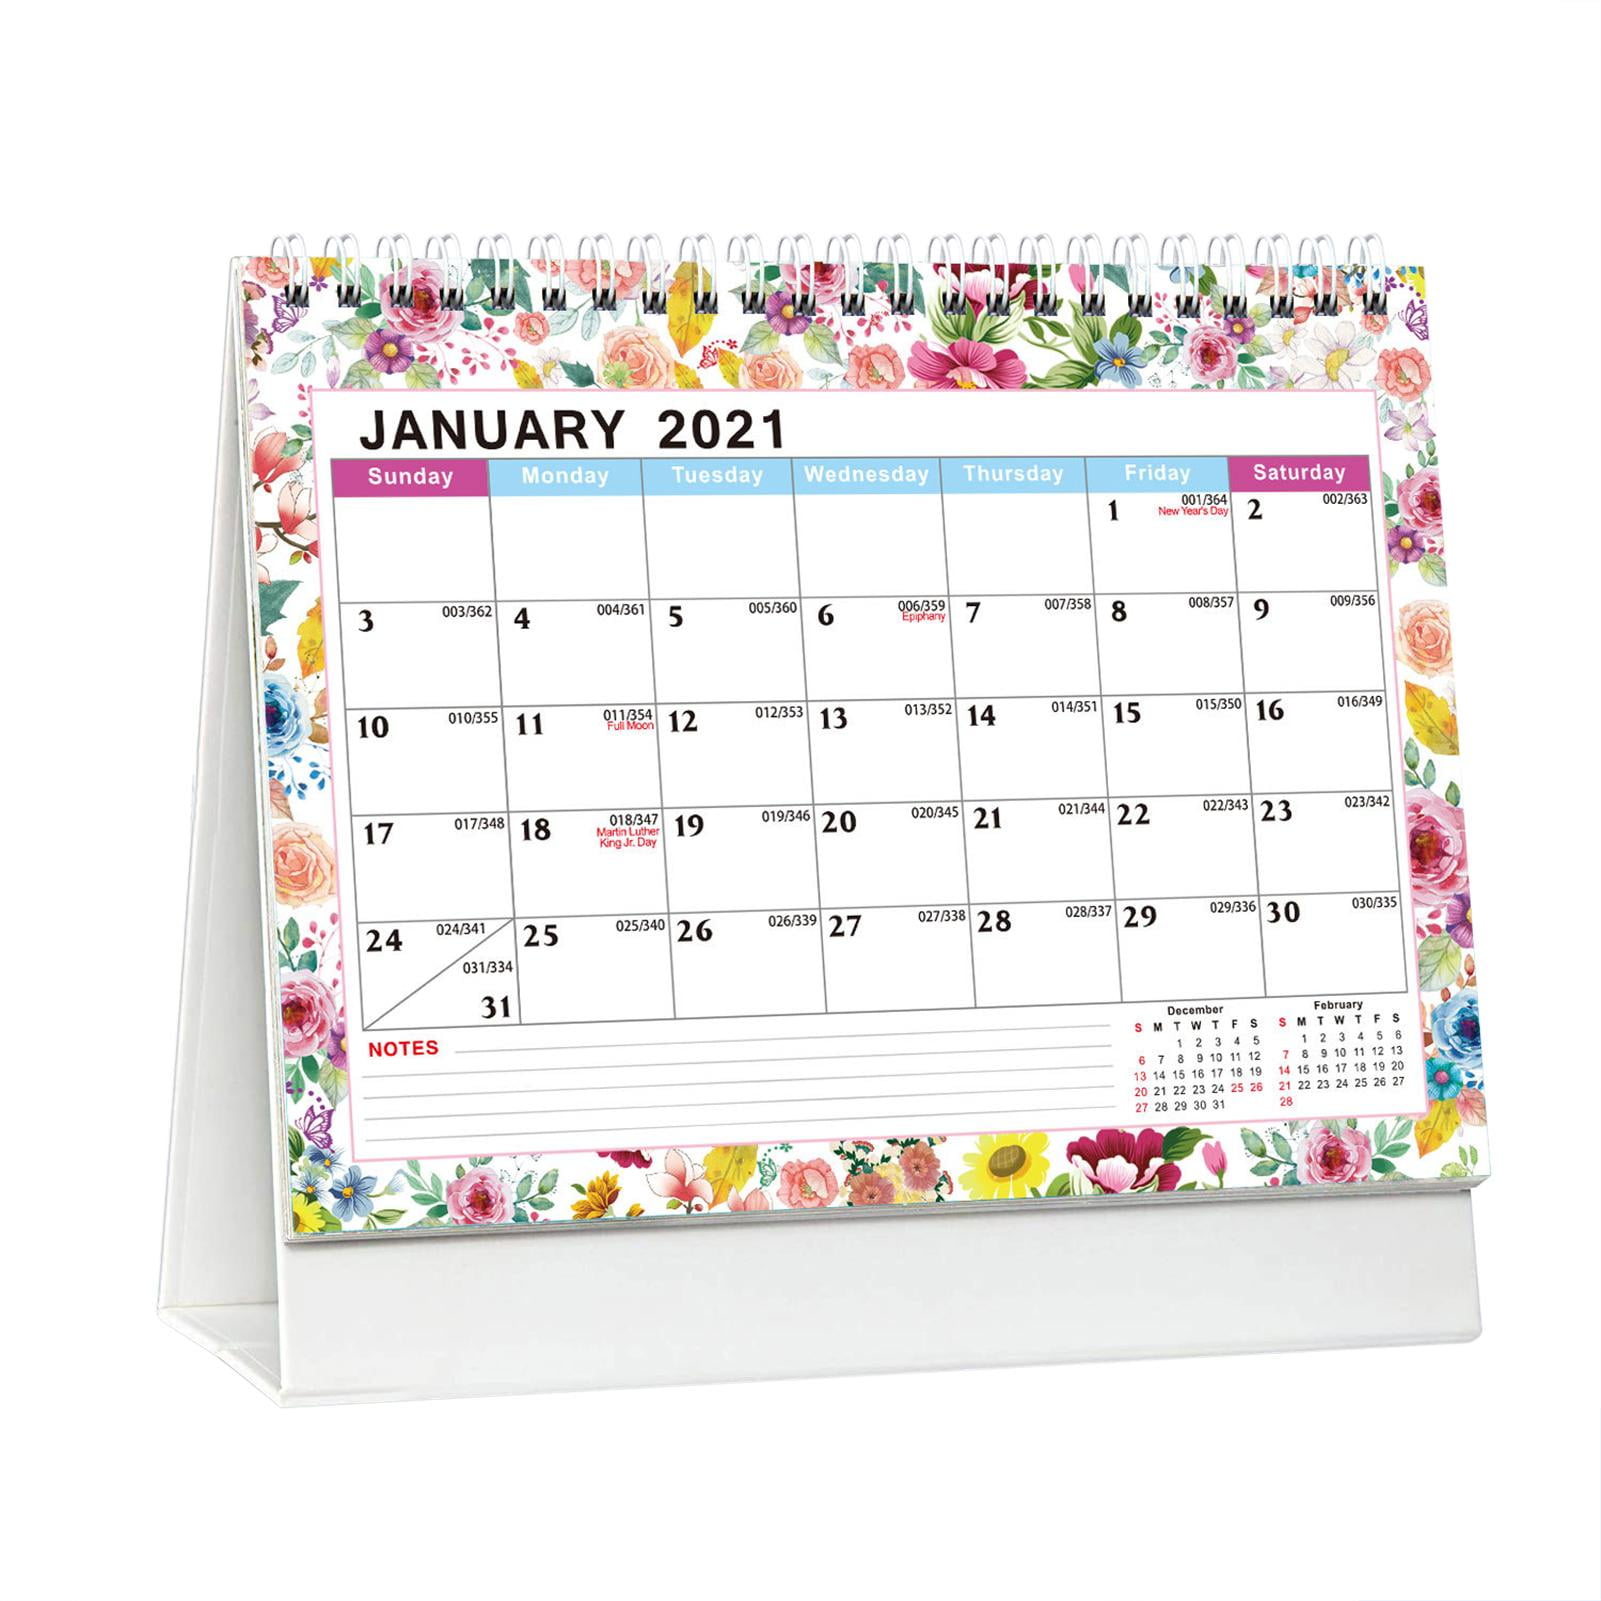 AIHOME 2021Wall Calendar Large Ruled Blocks Monthly Desk Calendar